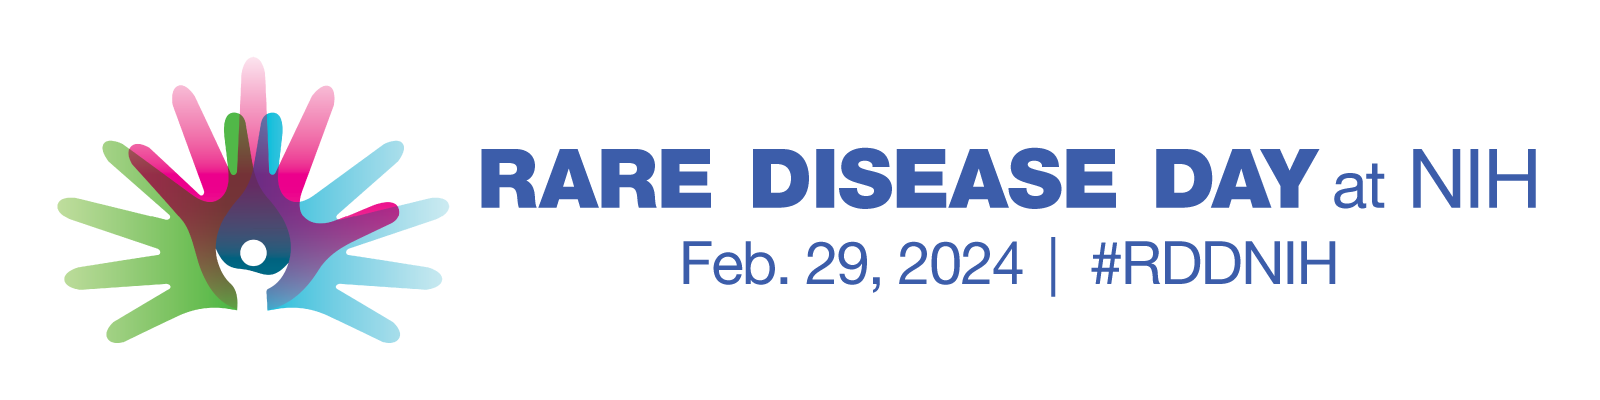 Rare Disease Day at NIH Logo